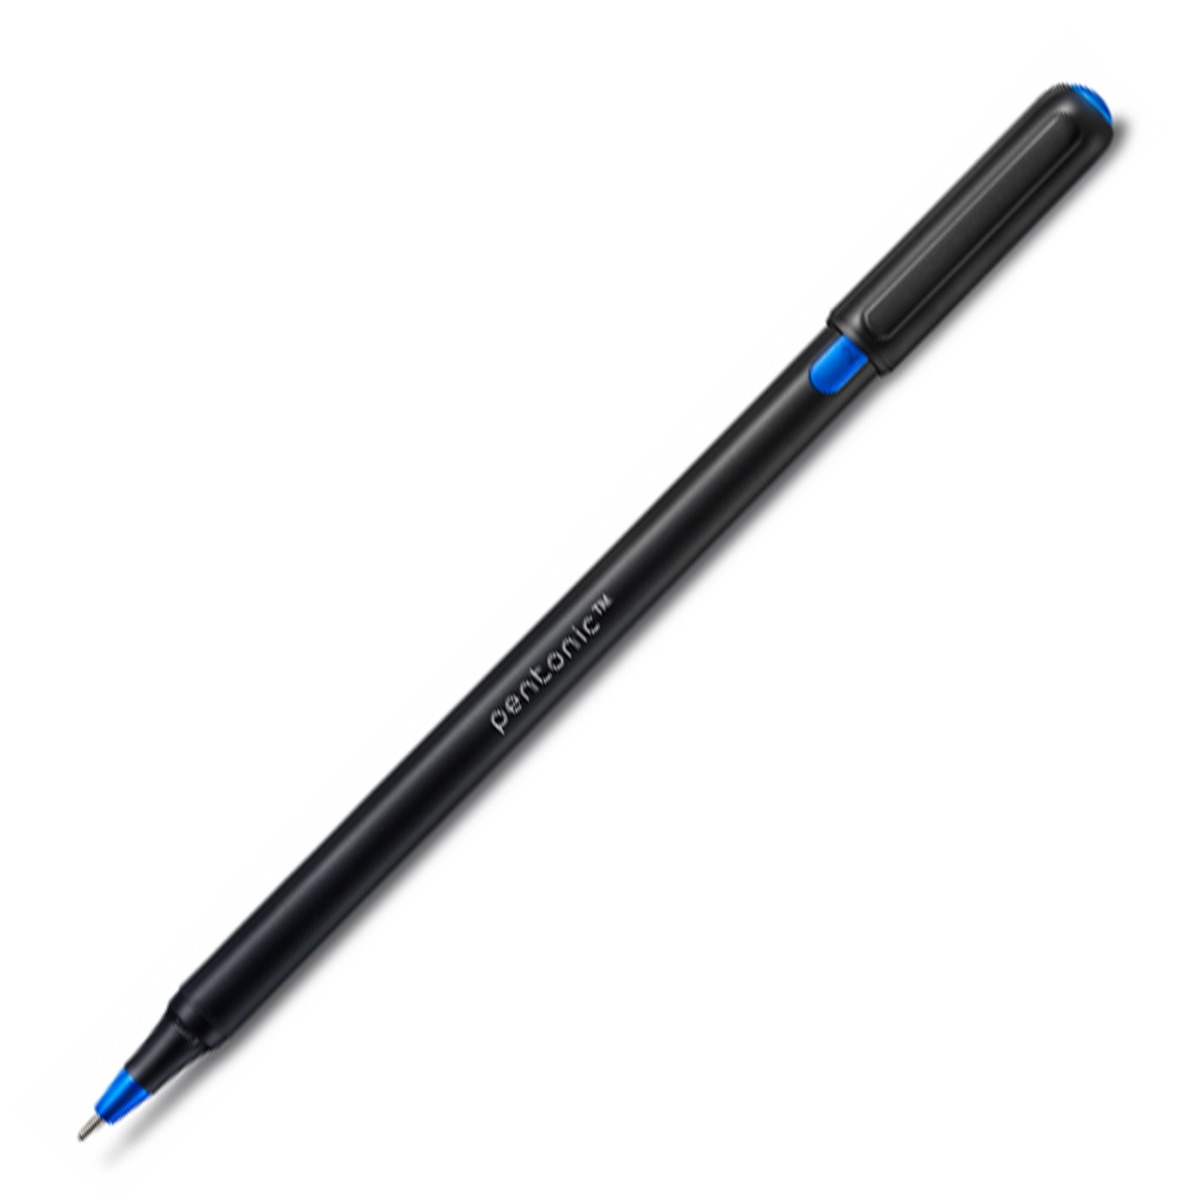 Linc Pentonic Model:16976 Black Color Body With Blue Writing  Cap Type Ball Pen